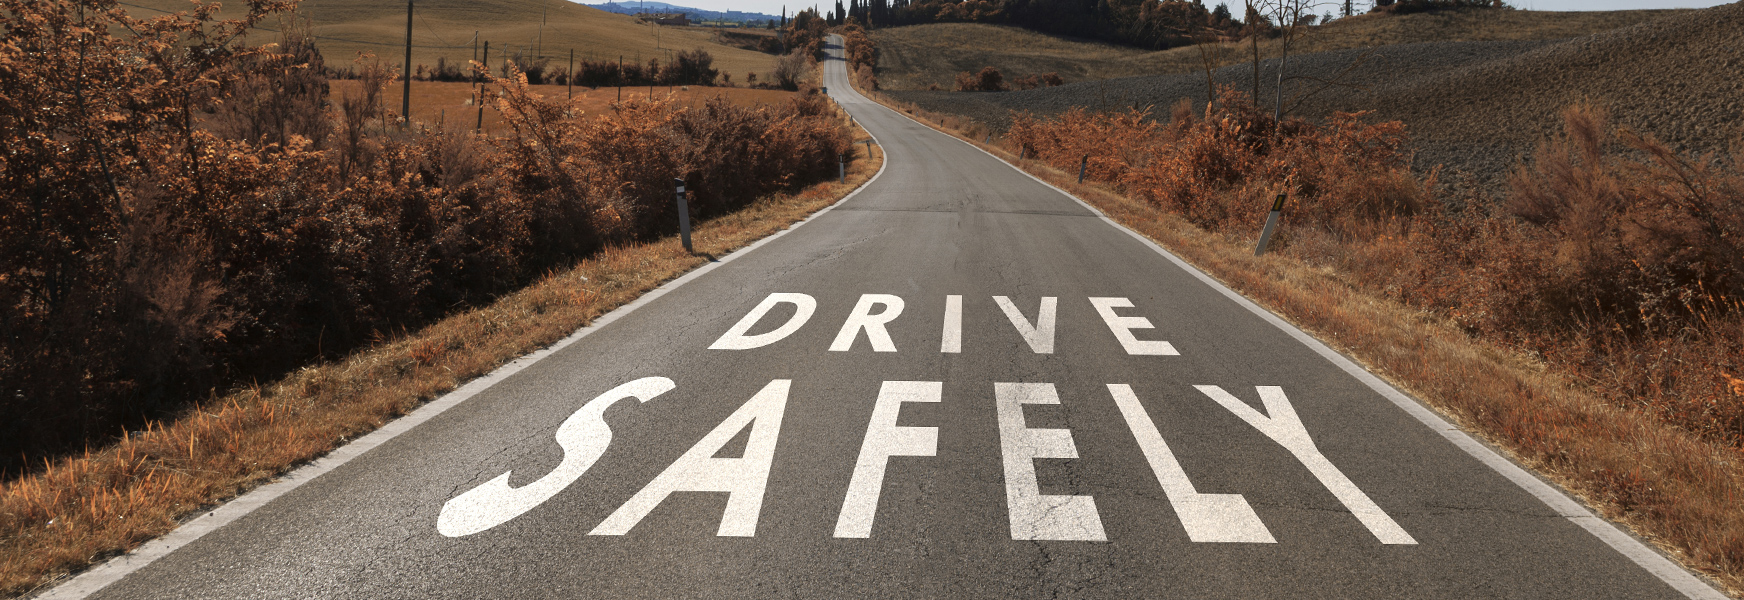 Drive Safely written across rural road